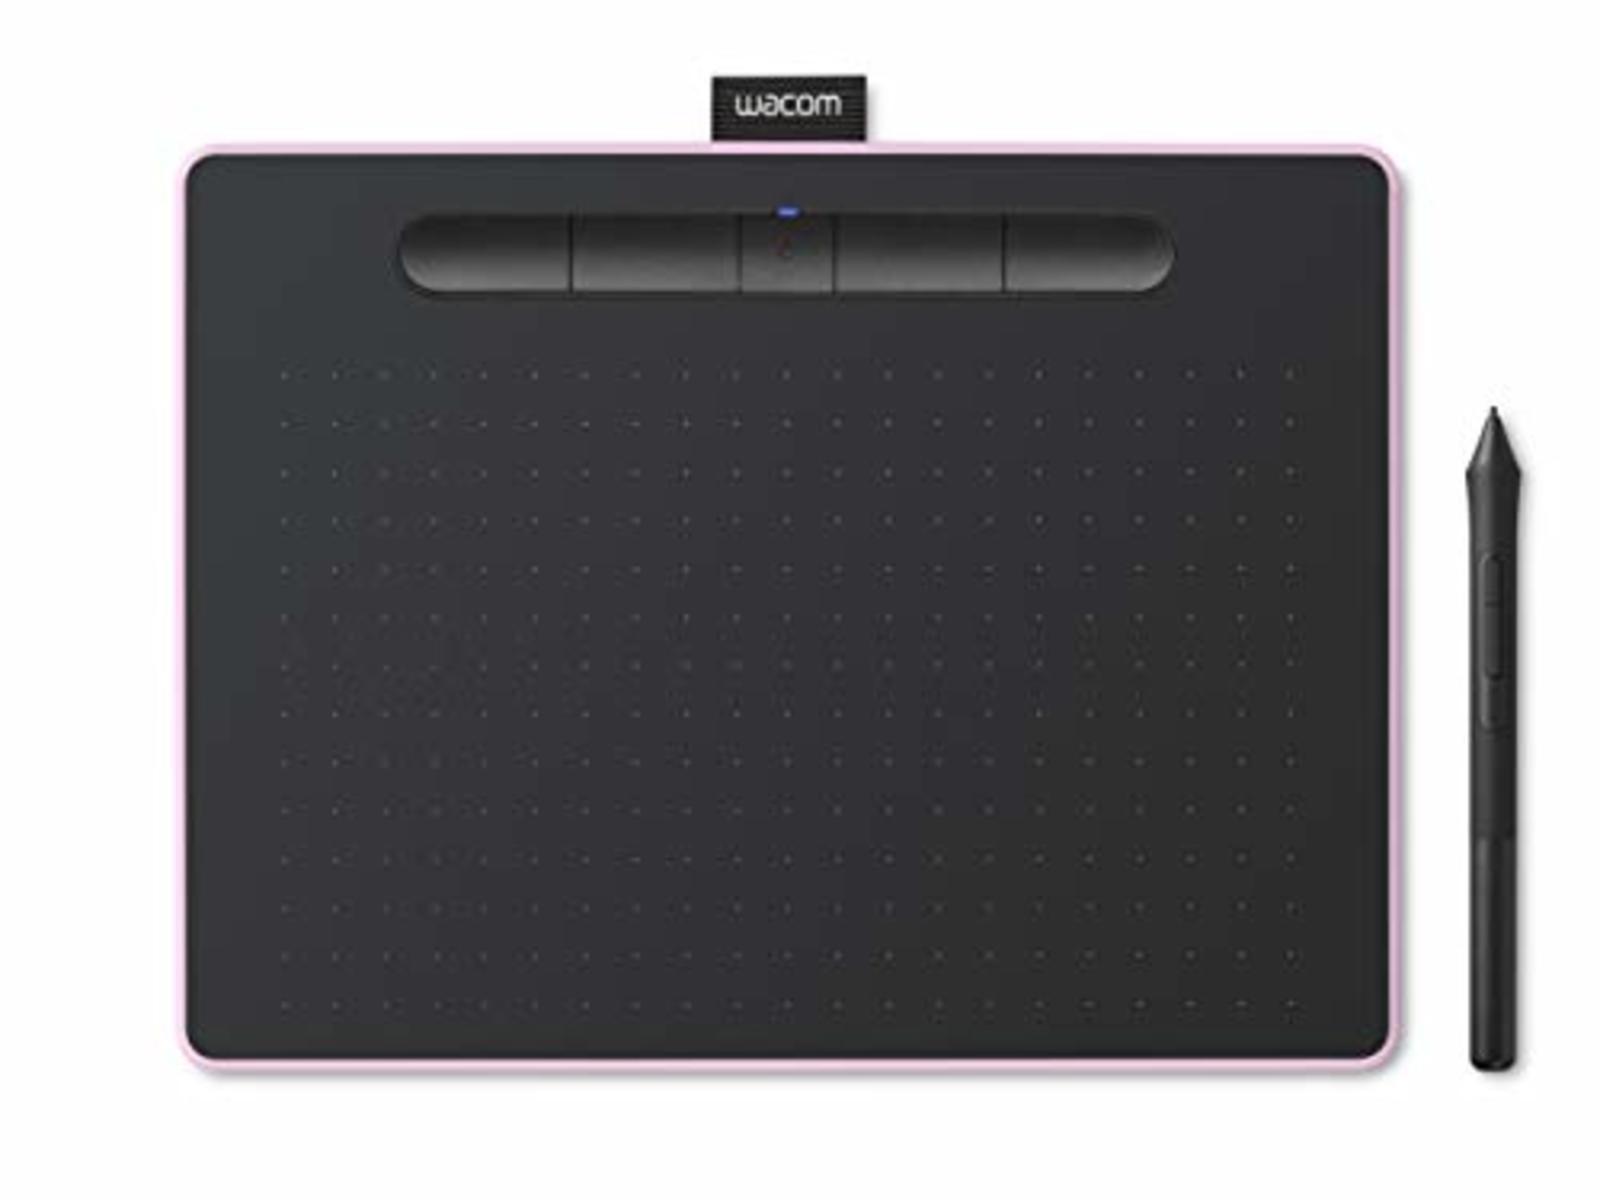 wacom intuos tablet install